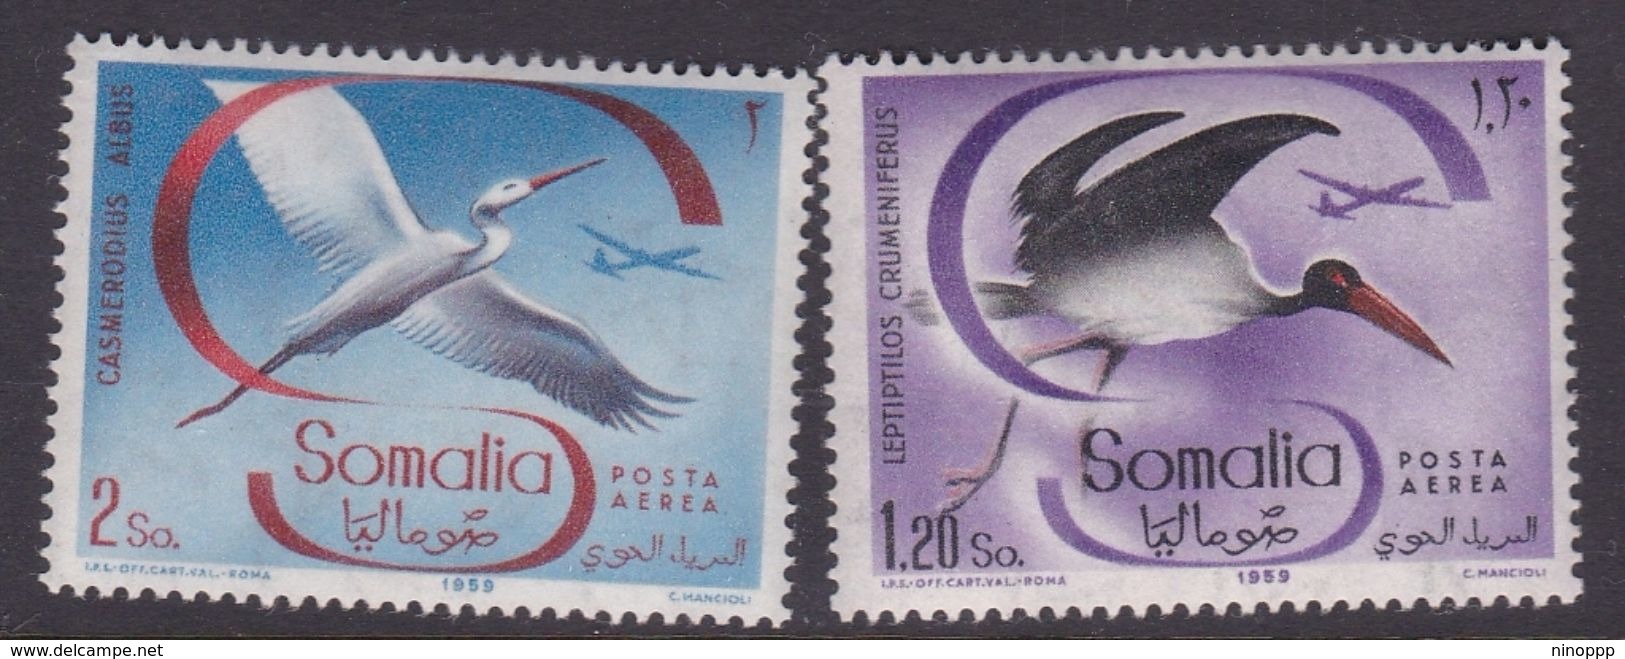 Somalia Scott C59-60 1959 Birds, Mint Never Hinged - Somalie (AFIS)